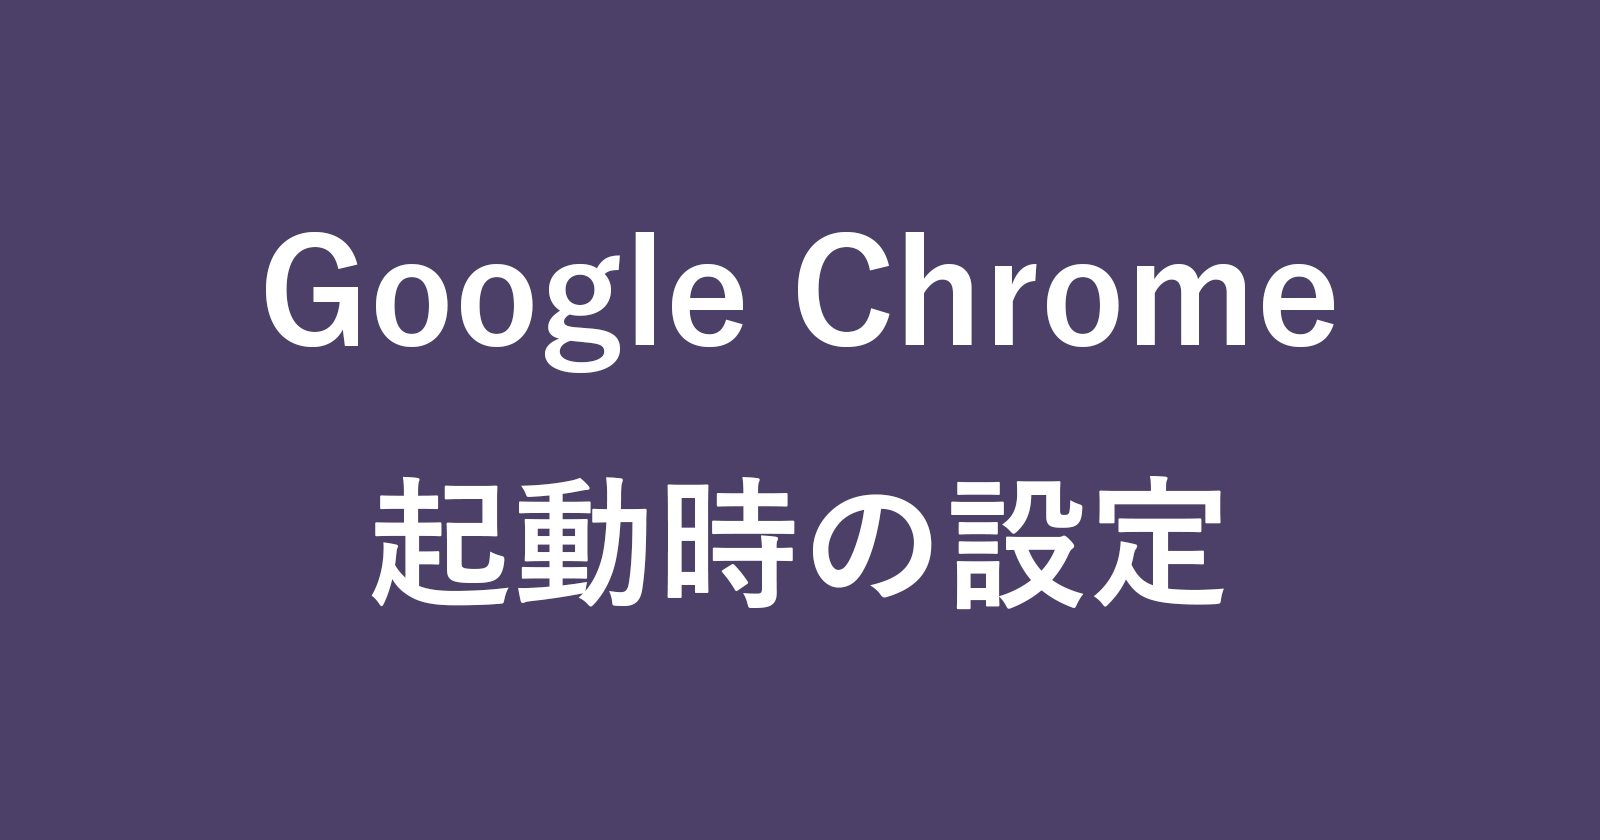 google chrome all tab save